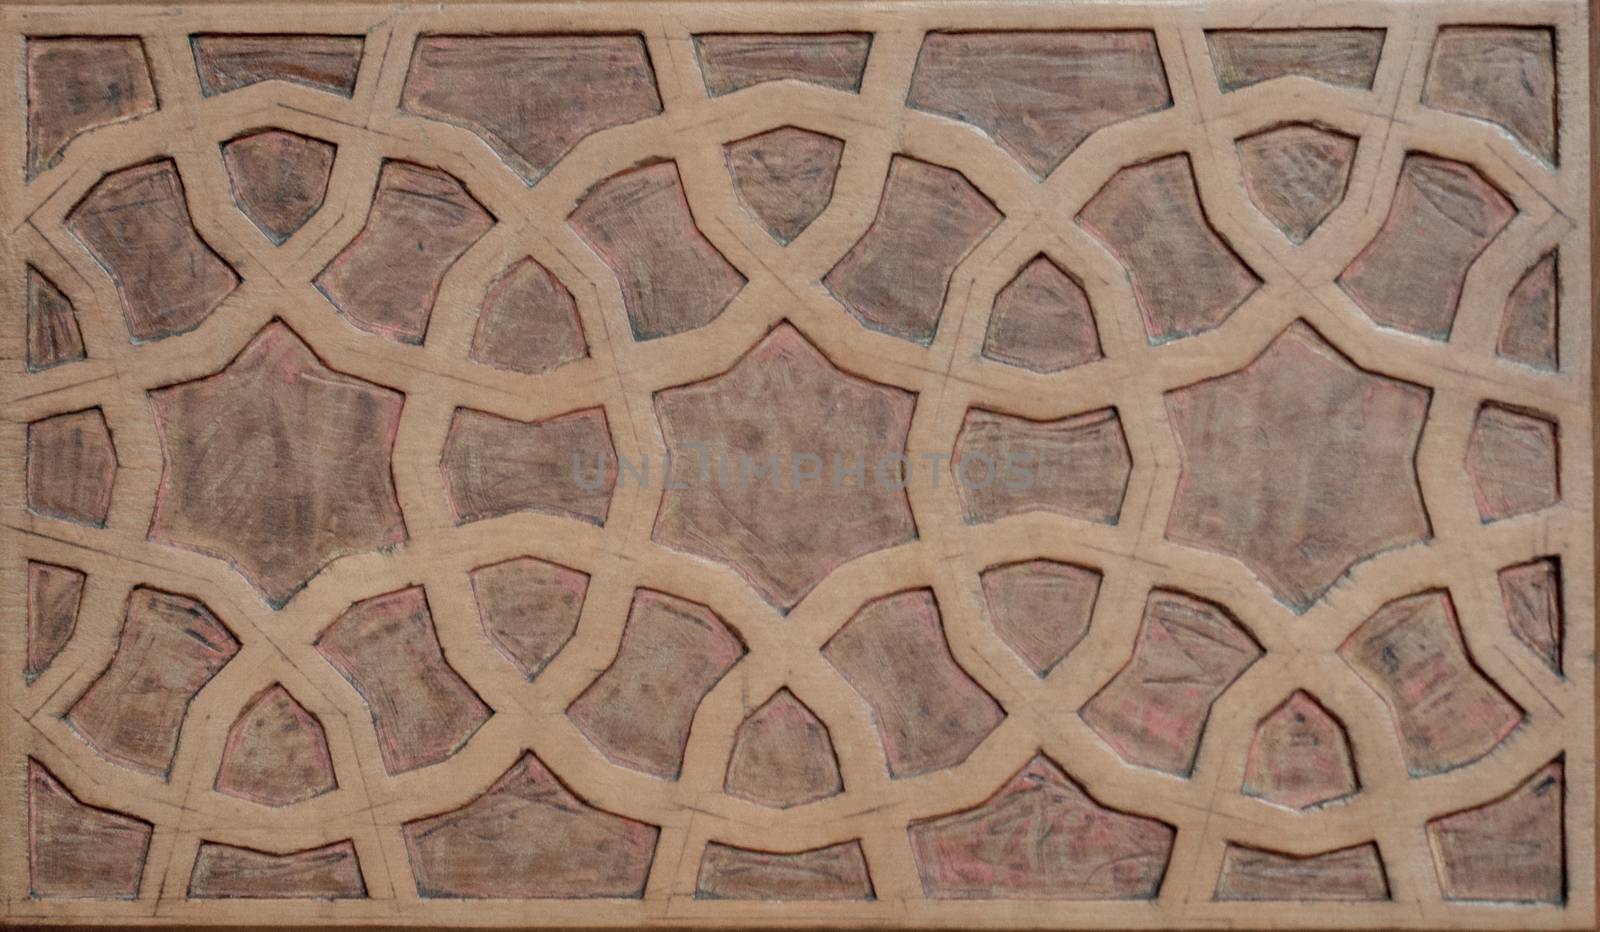 Ottoman Turkish  art with geometric patterns on wood